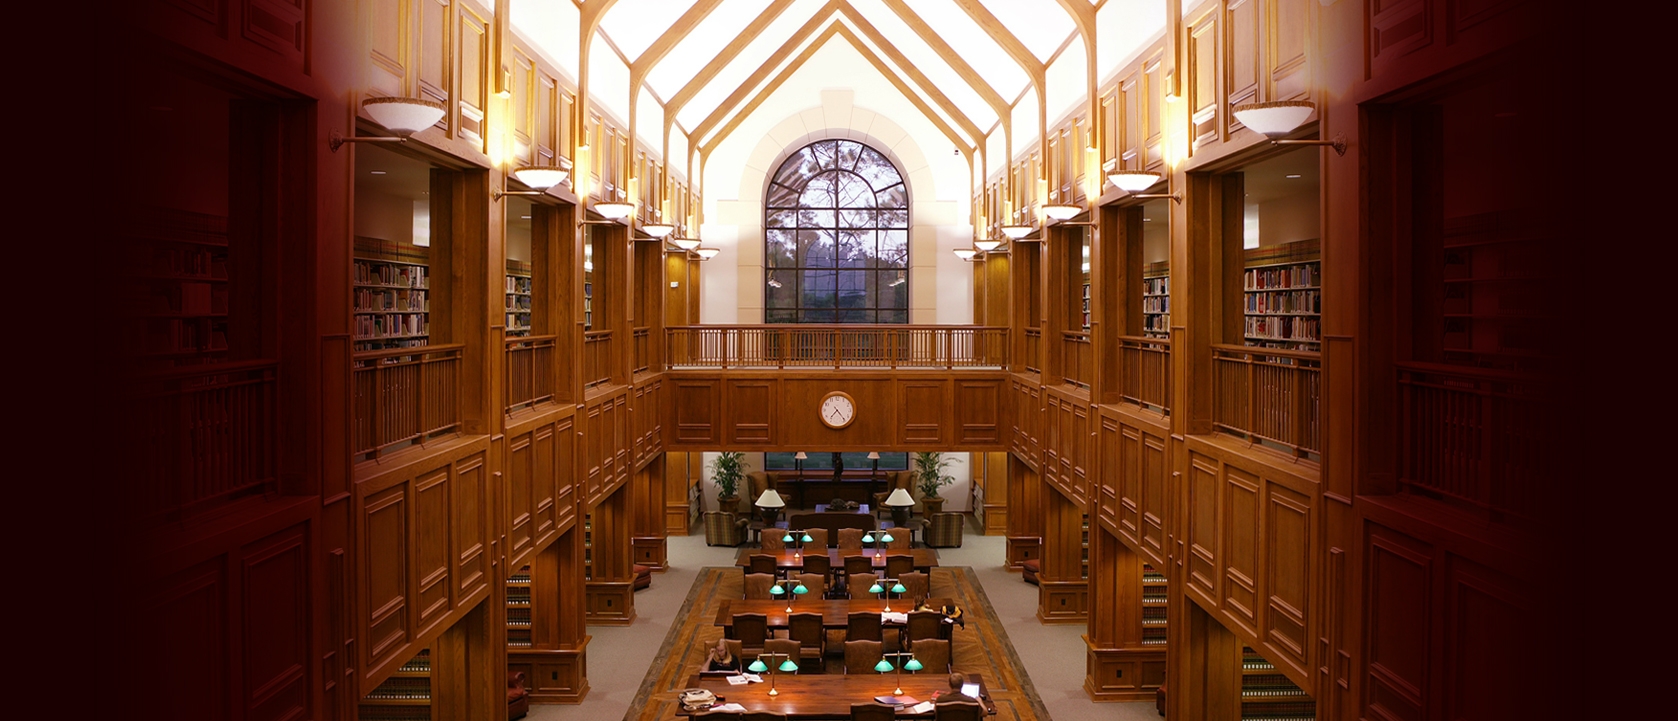 Donald E. Pray Law Library